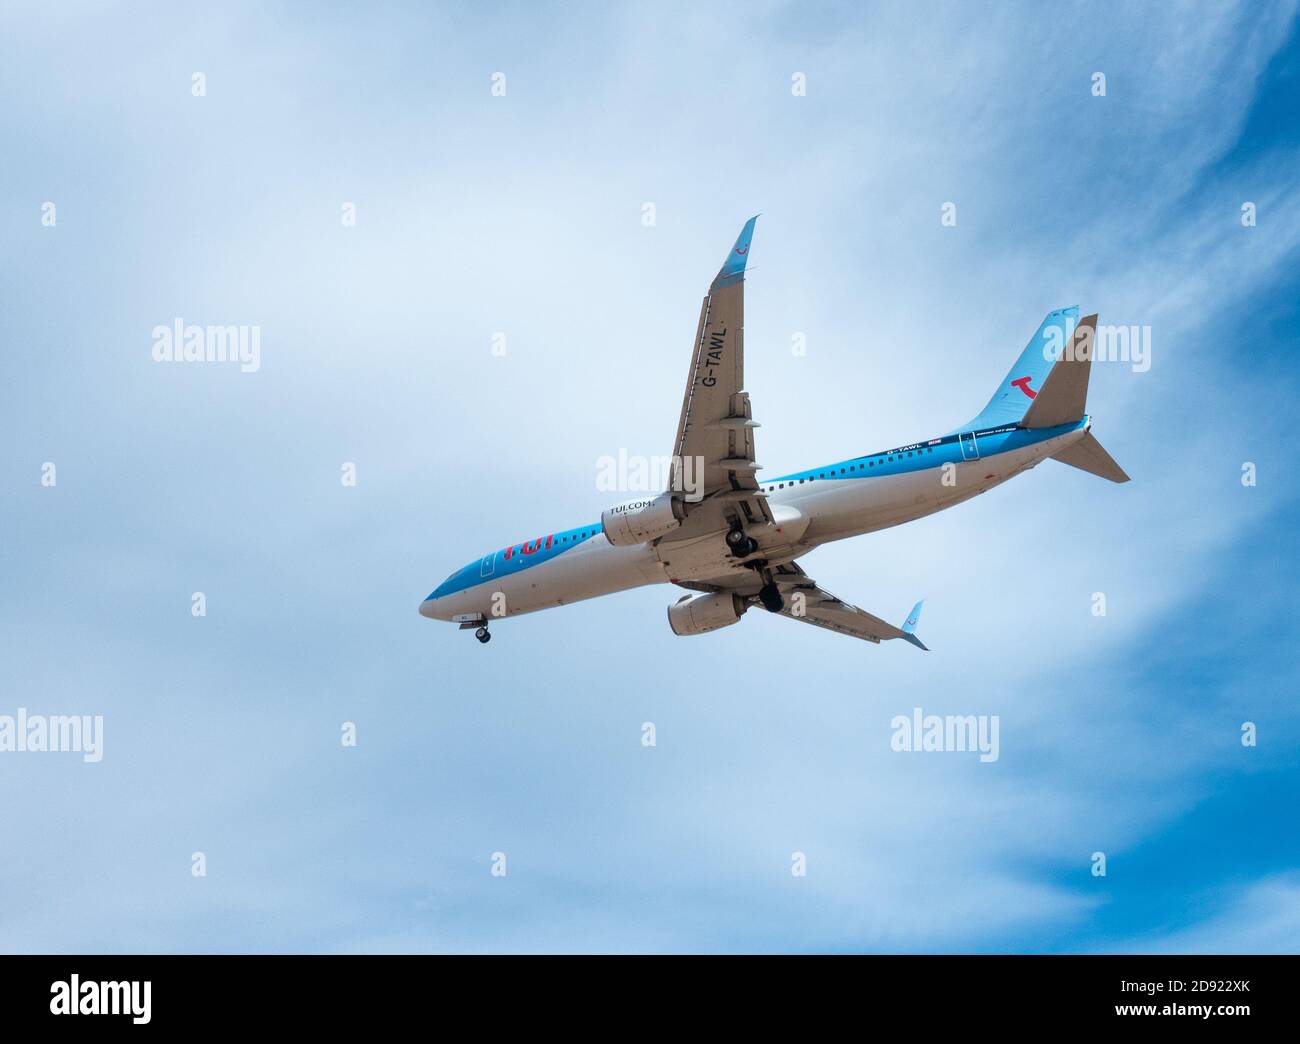 Flug tui -Fotos und -Bildmaterial in hoher Auflösung – Alamy